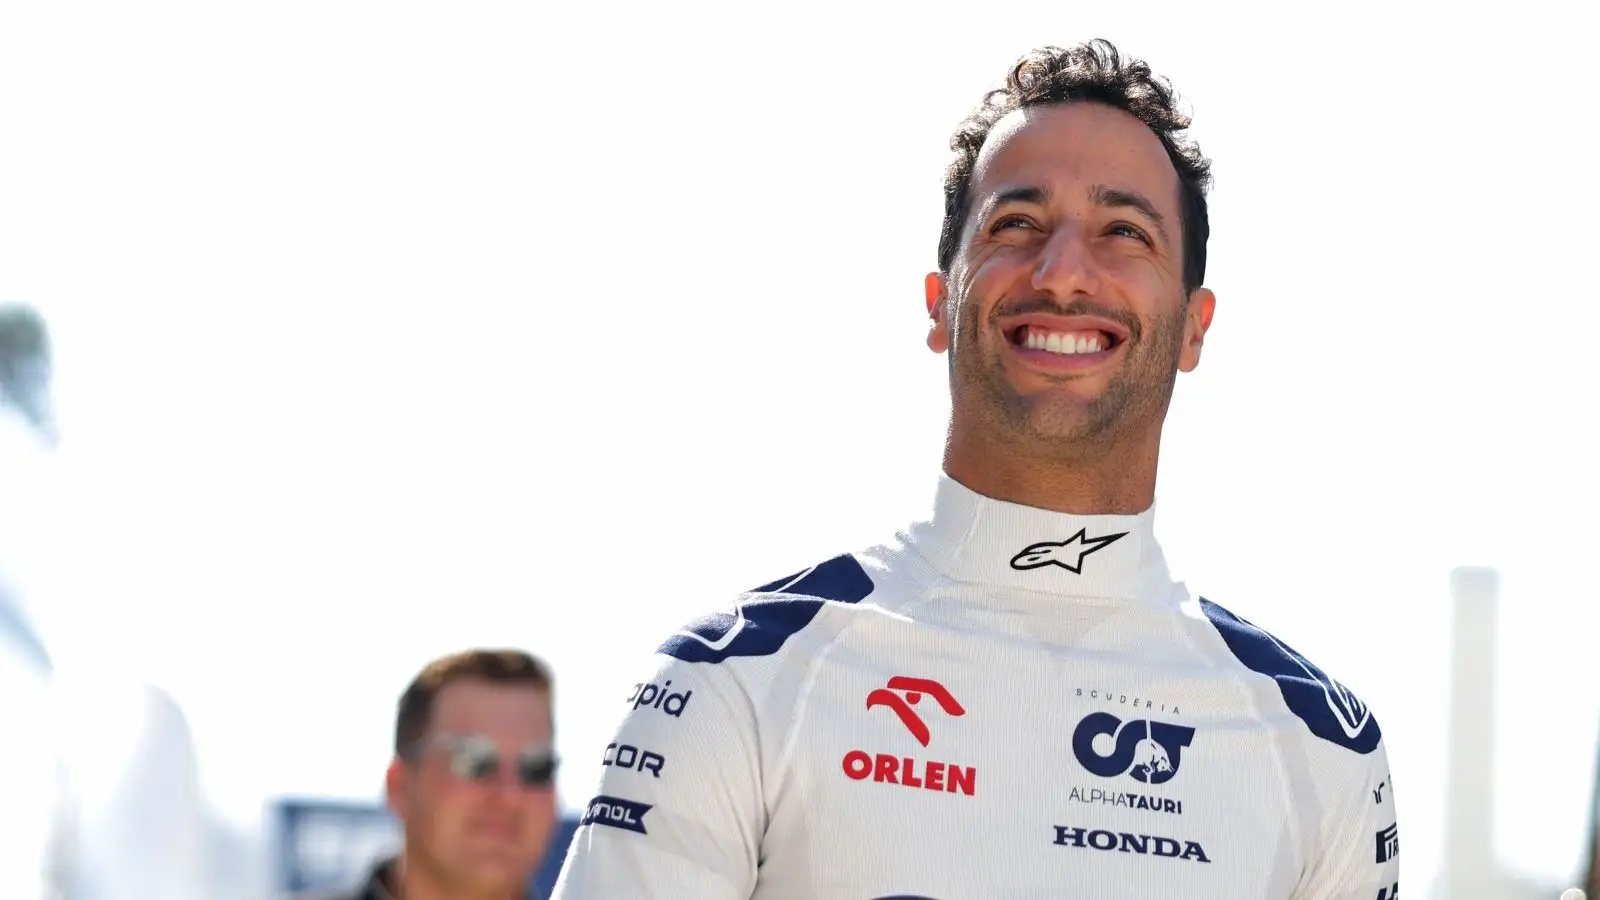 Daniel Ricciardo smiles as he walks through the paddock ahead of his F1 return with AlphaTauri at the Hungarian Grand Prix. Budapest, July 2023.